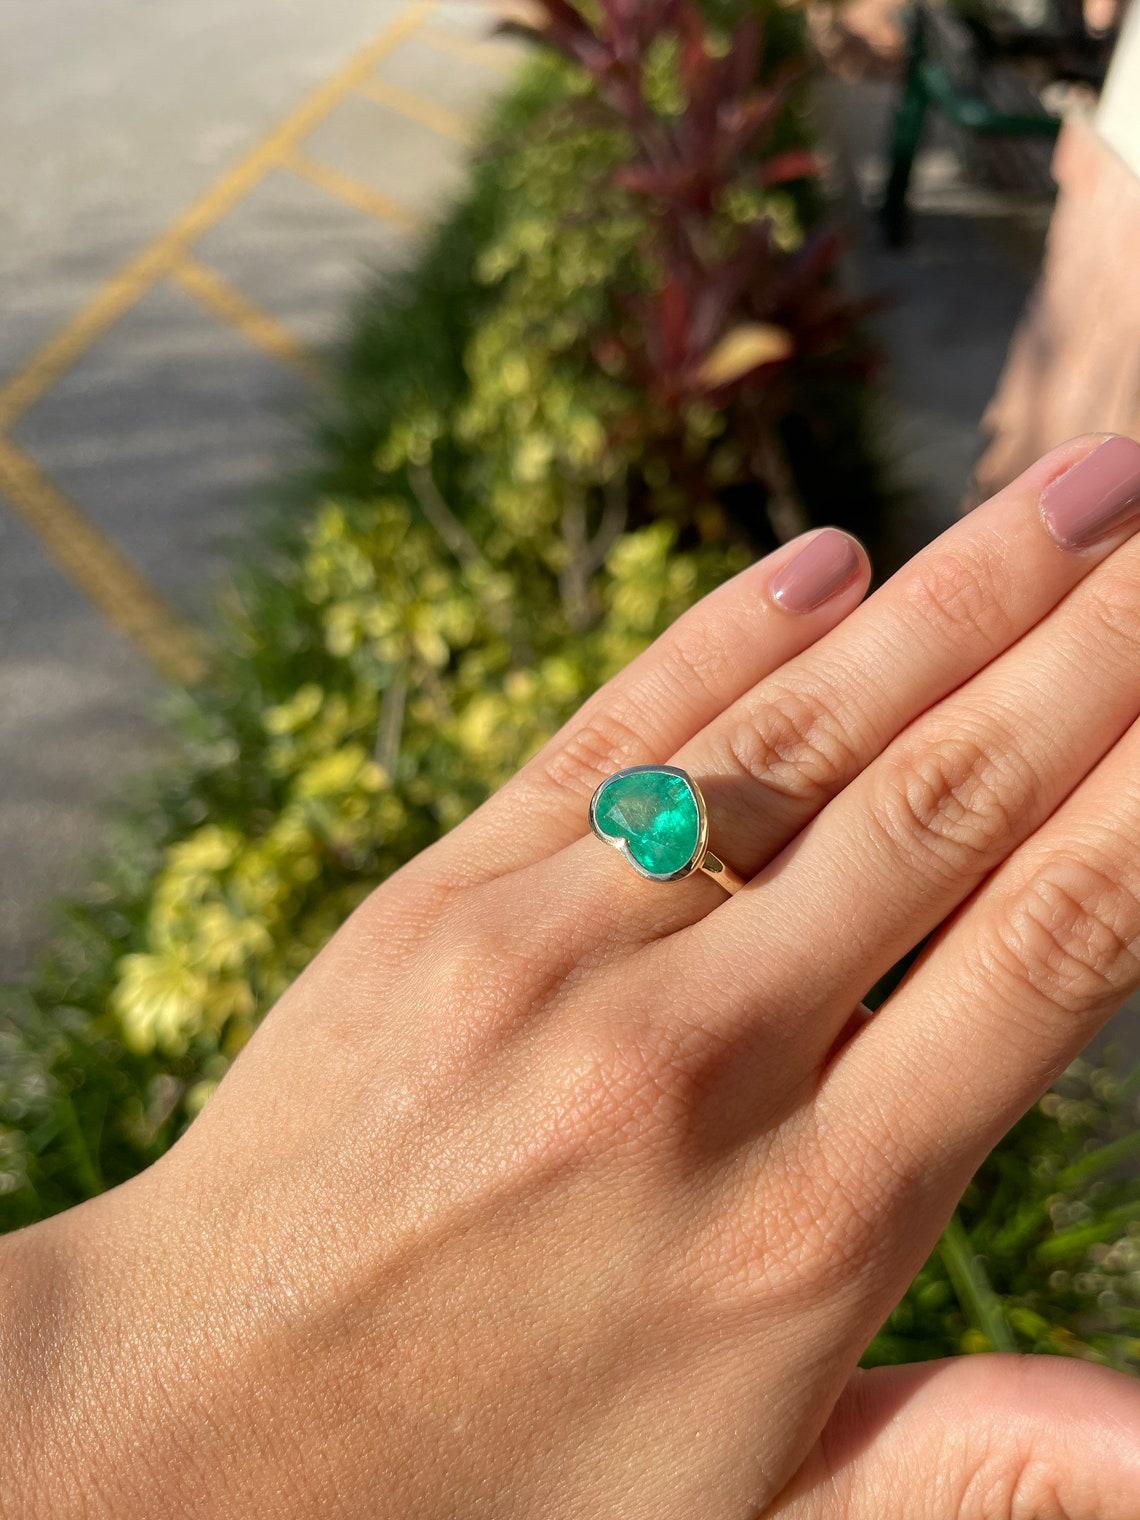 emerald heart ring